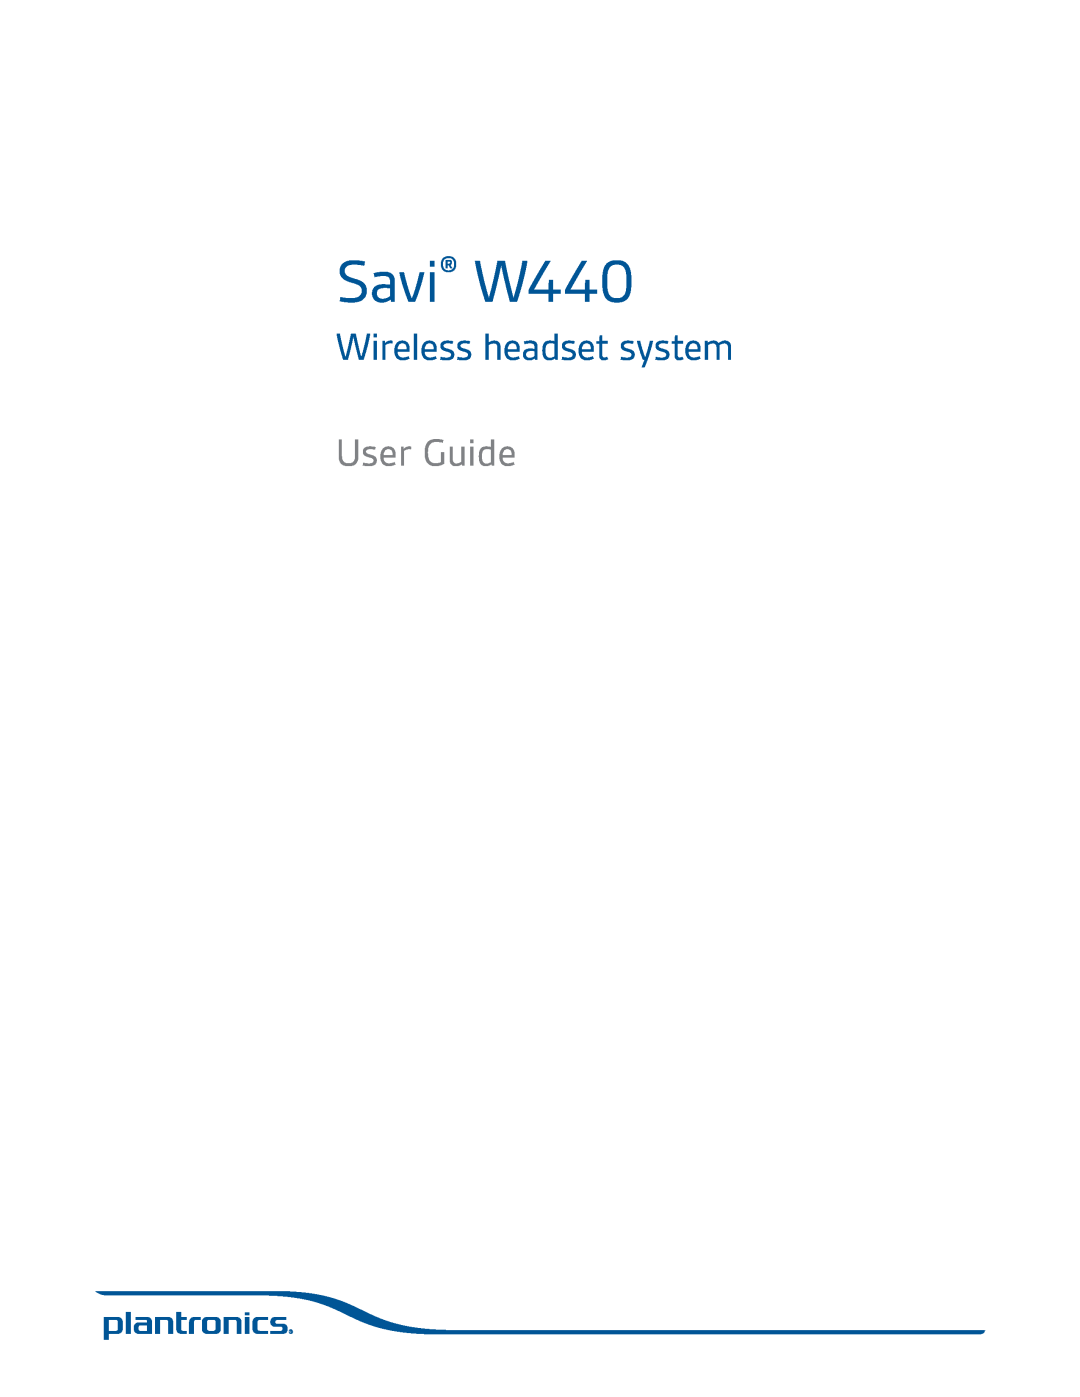 Plantronics manual Savi W440, Wireless headset system, User Guide 